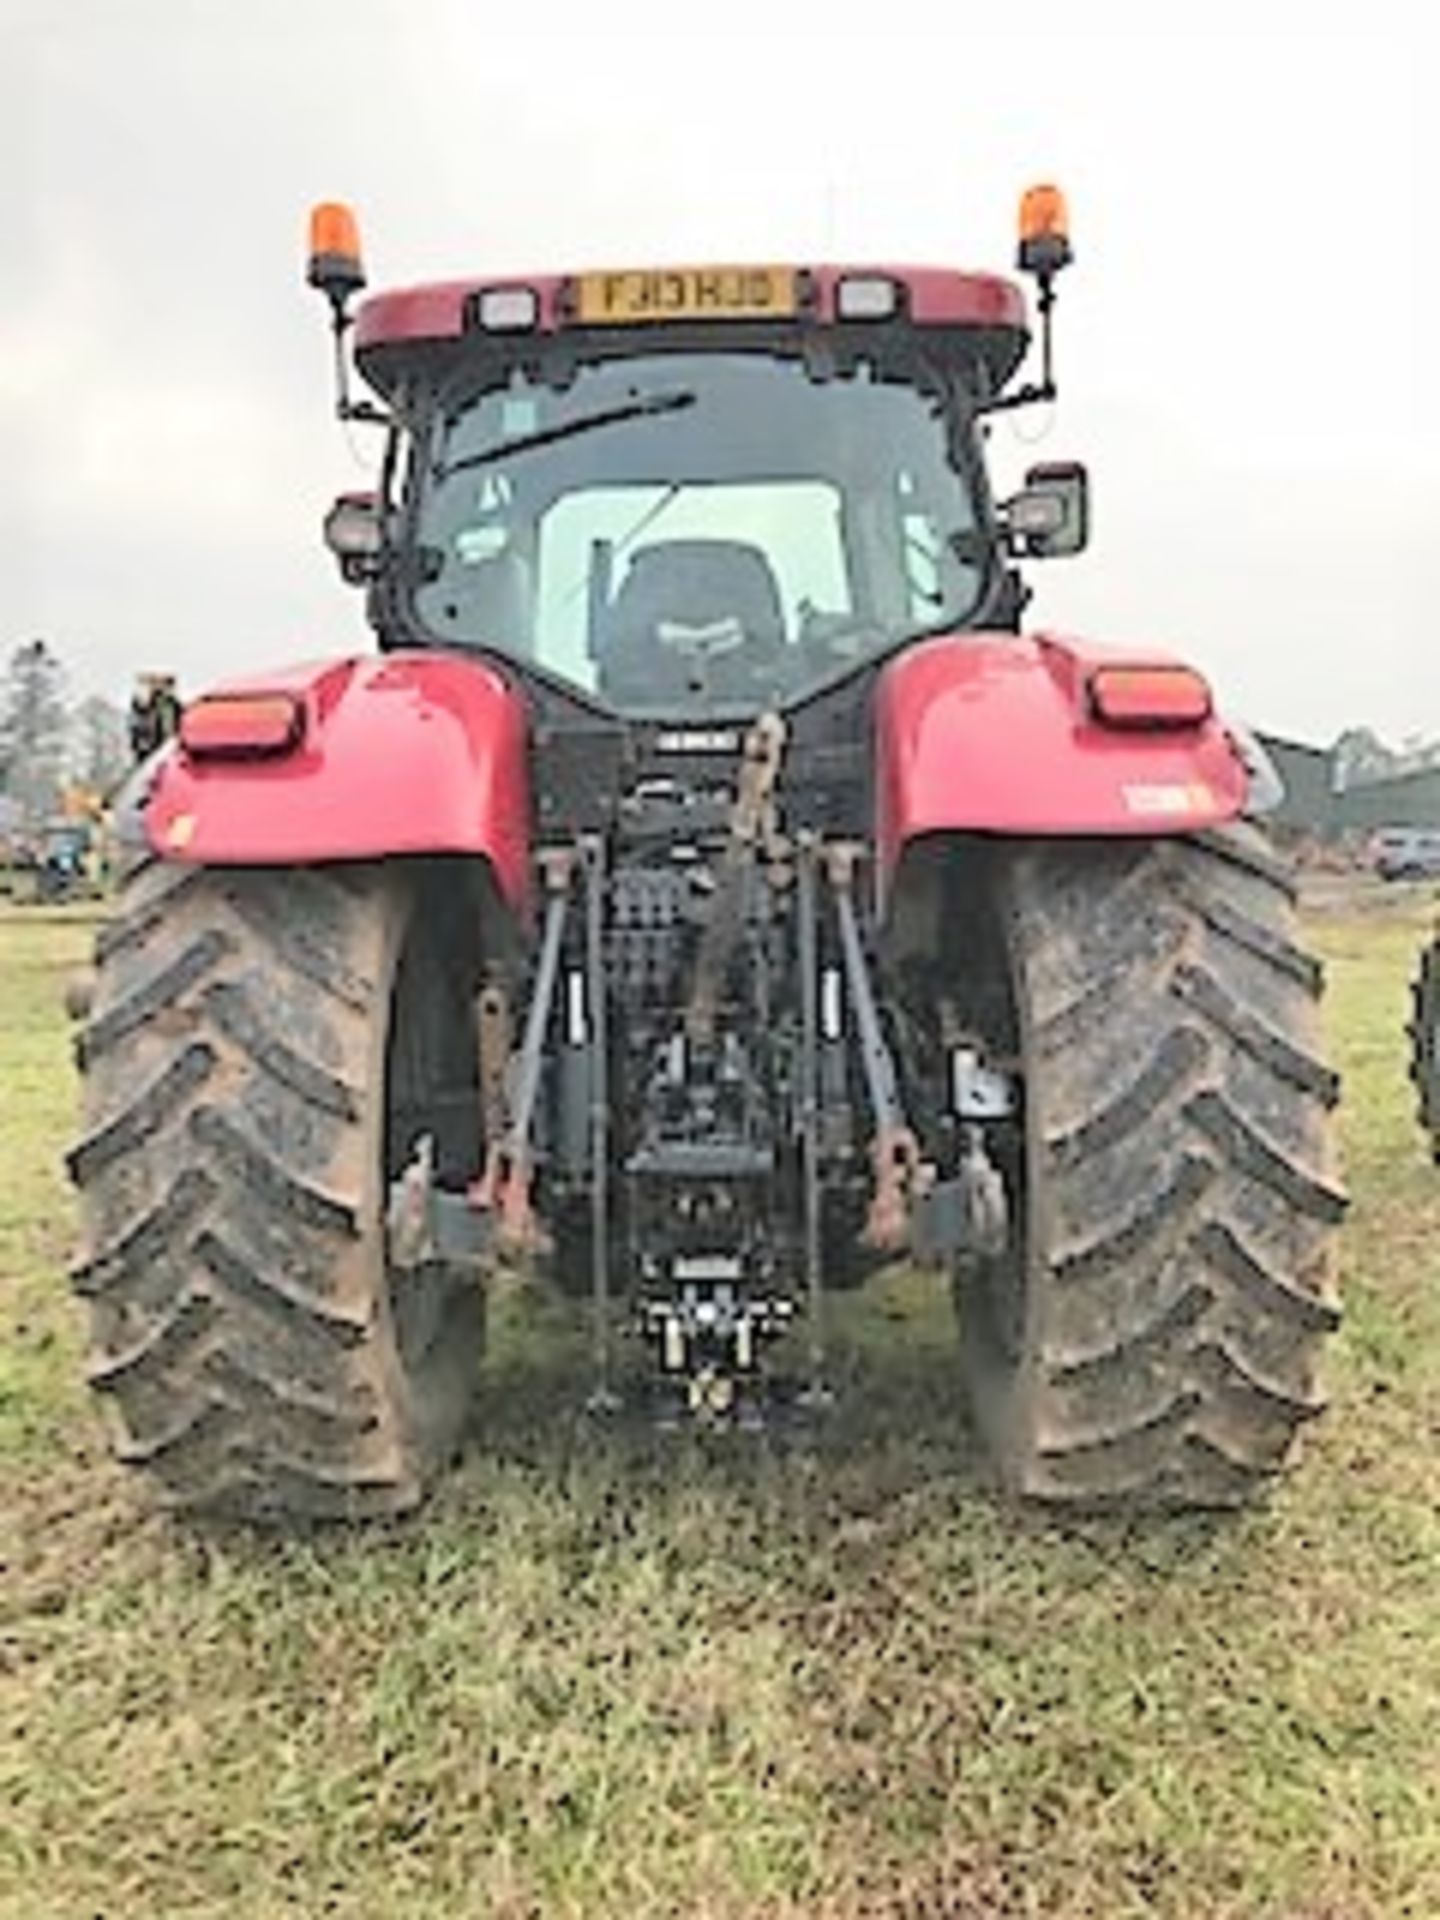 2013 CASE 230 PUMA 4ws tractor. Reg - FJ13HJD. 2742hrs (not verified) - Image 5 of 8